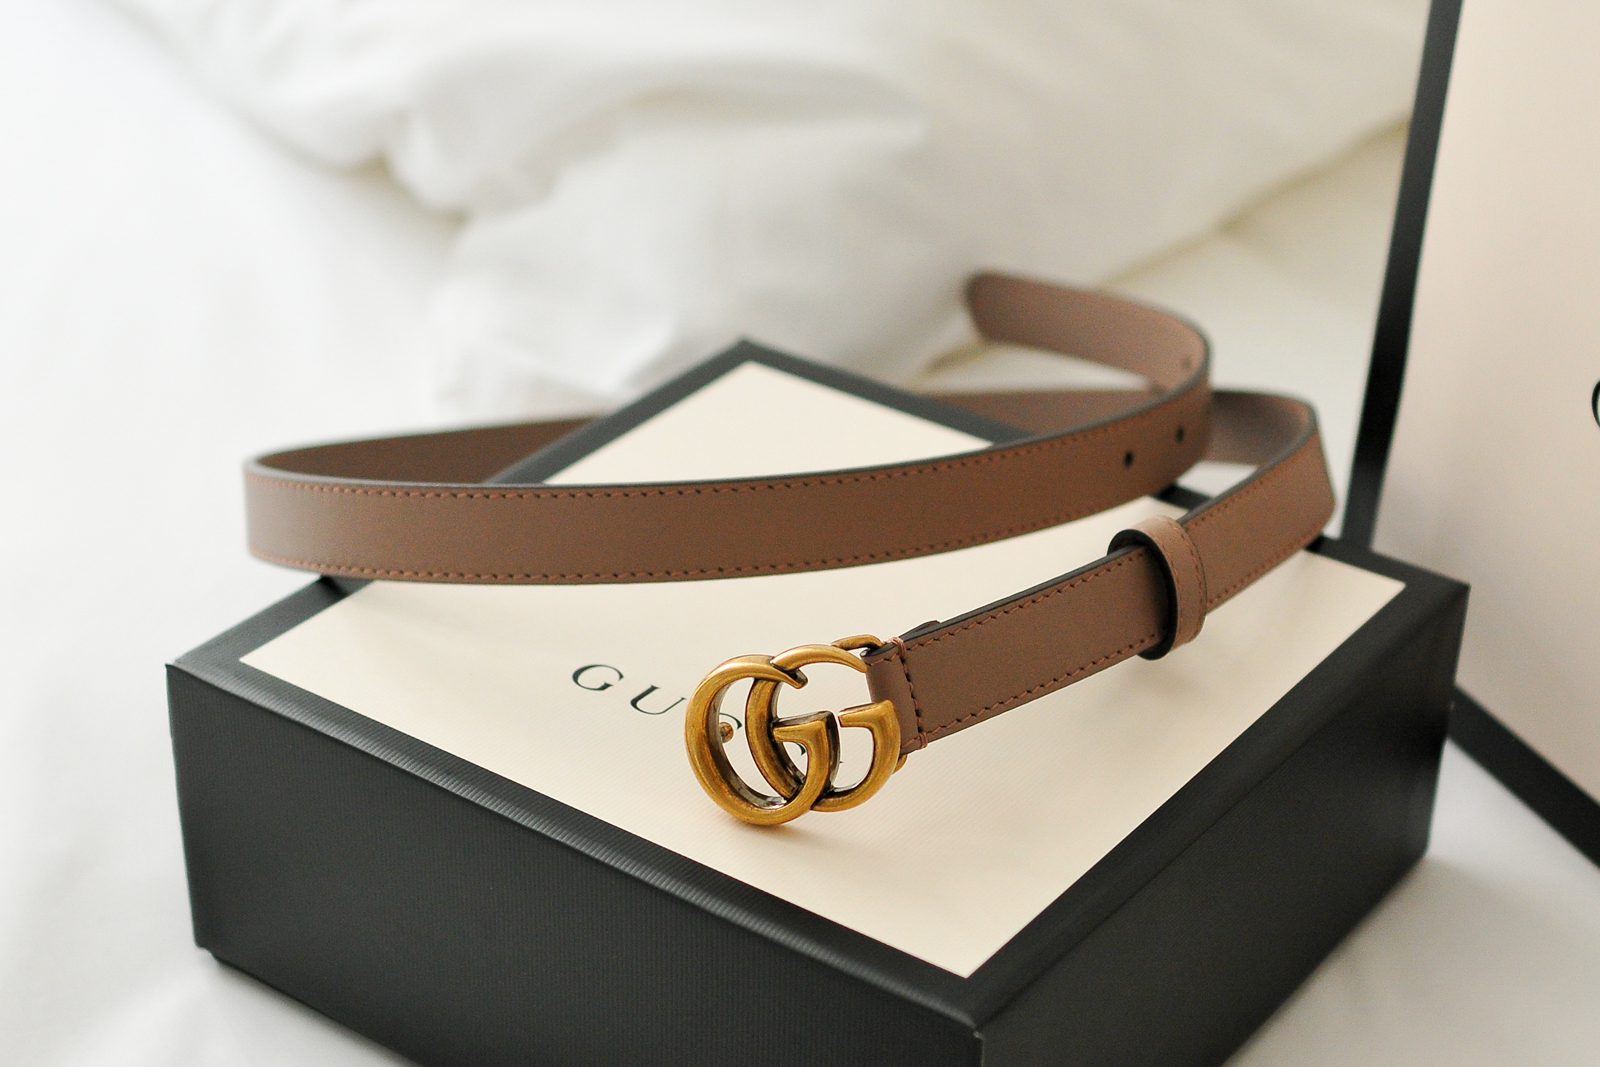 Schouderophalend Dekbed gelijktijdig Gucci Marmont belt & wat ik kocht in Lille| Lifestyle by Linda